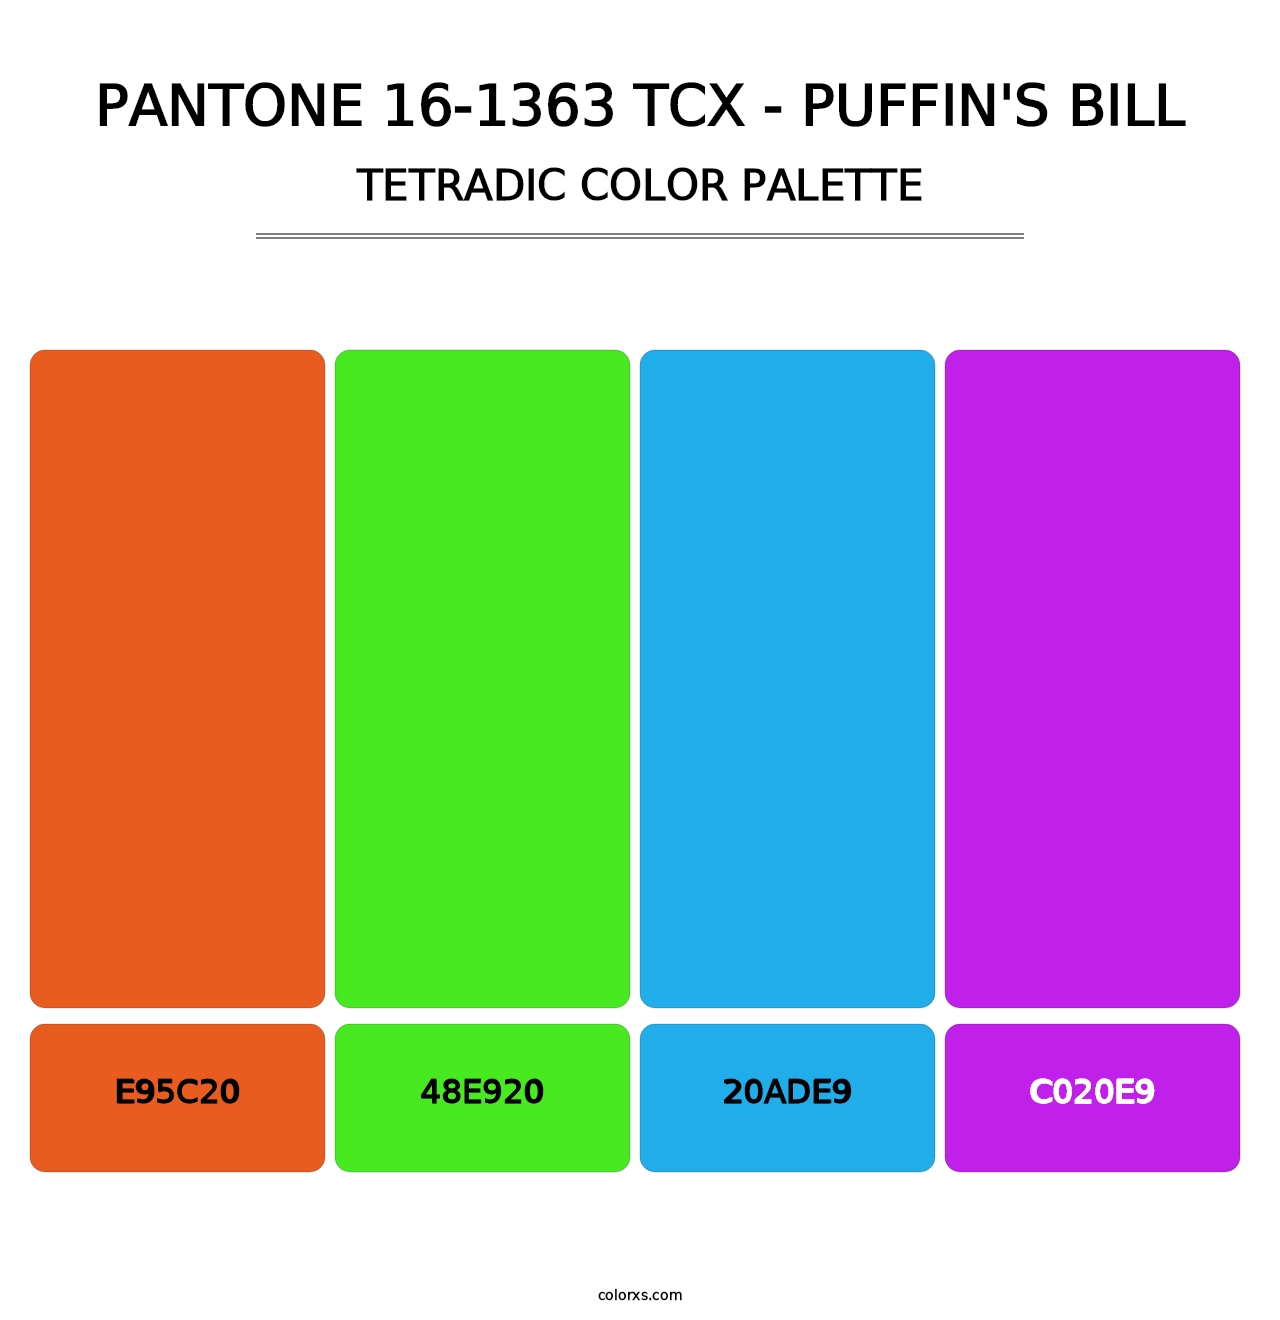 PANTONE 16-1363 TCX - Puffin's Bill - Tetradic Color Palette